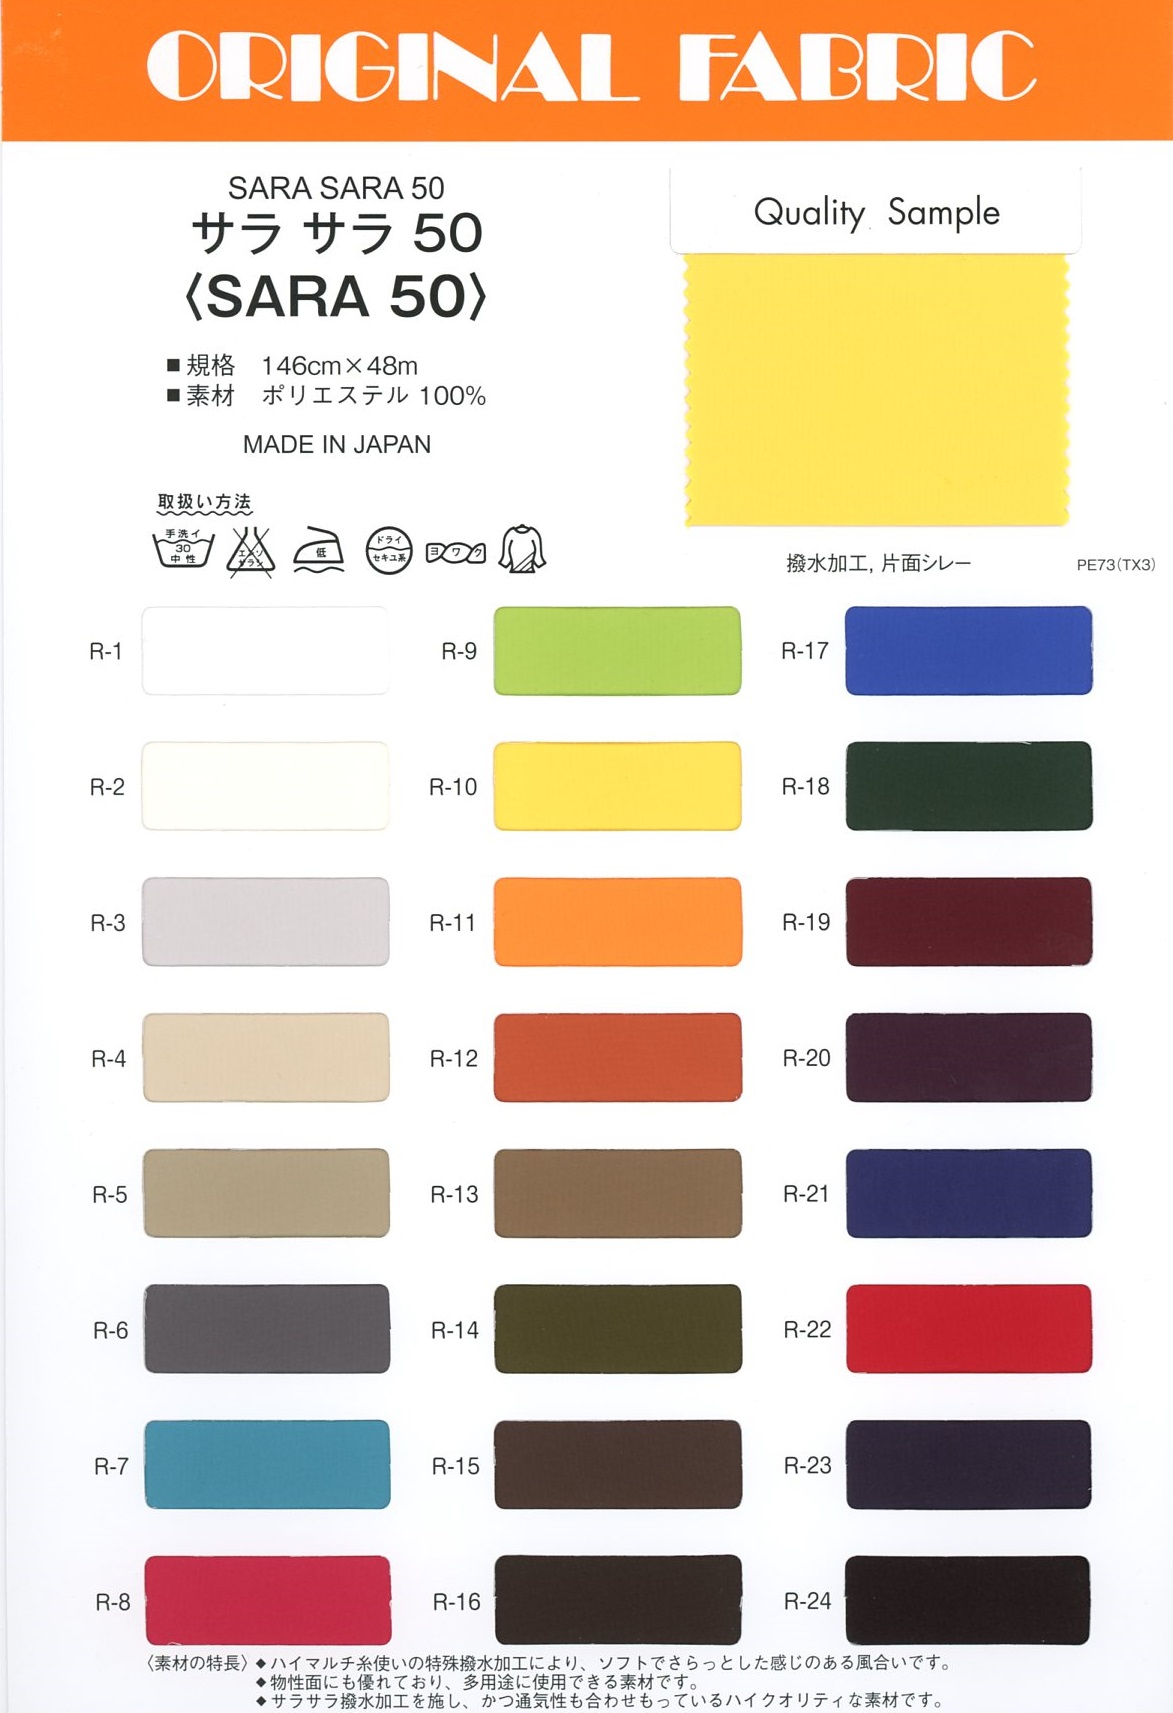 SARA50 Sara Sara 50[Textile / Fabric] Masuda